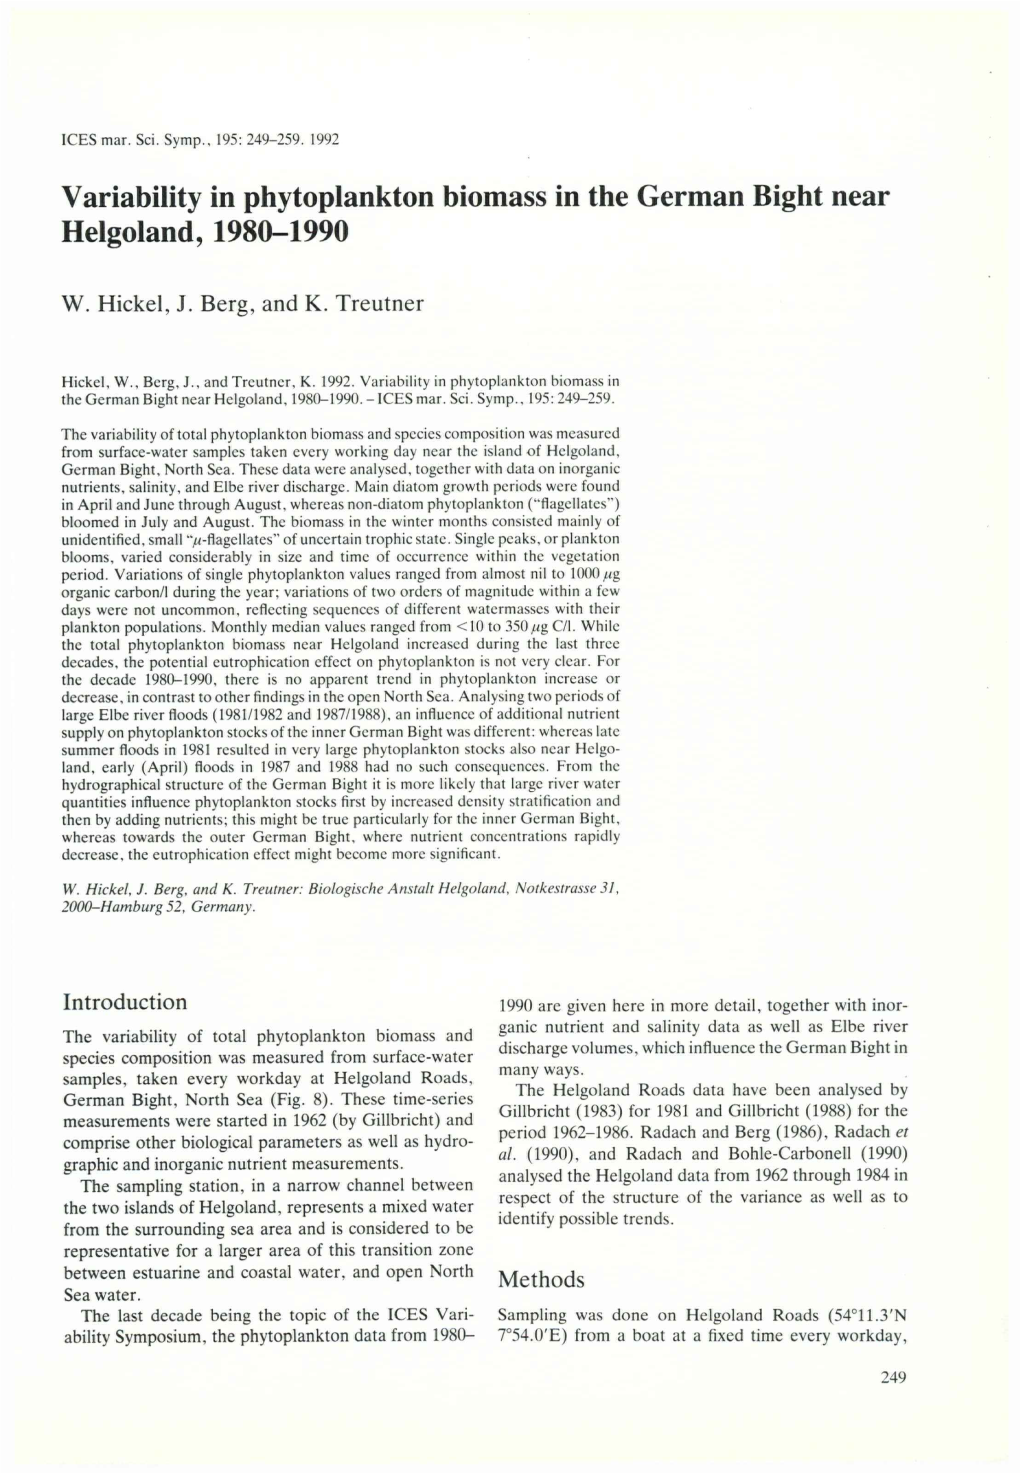 Variability in Phytoplankton Biomass in the German Bight Near Helgoland, 1980-1990